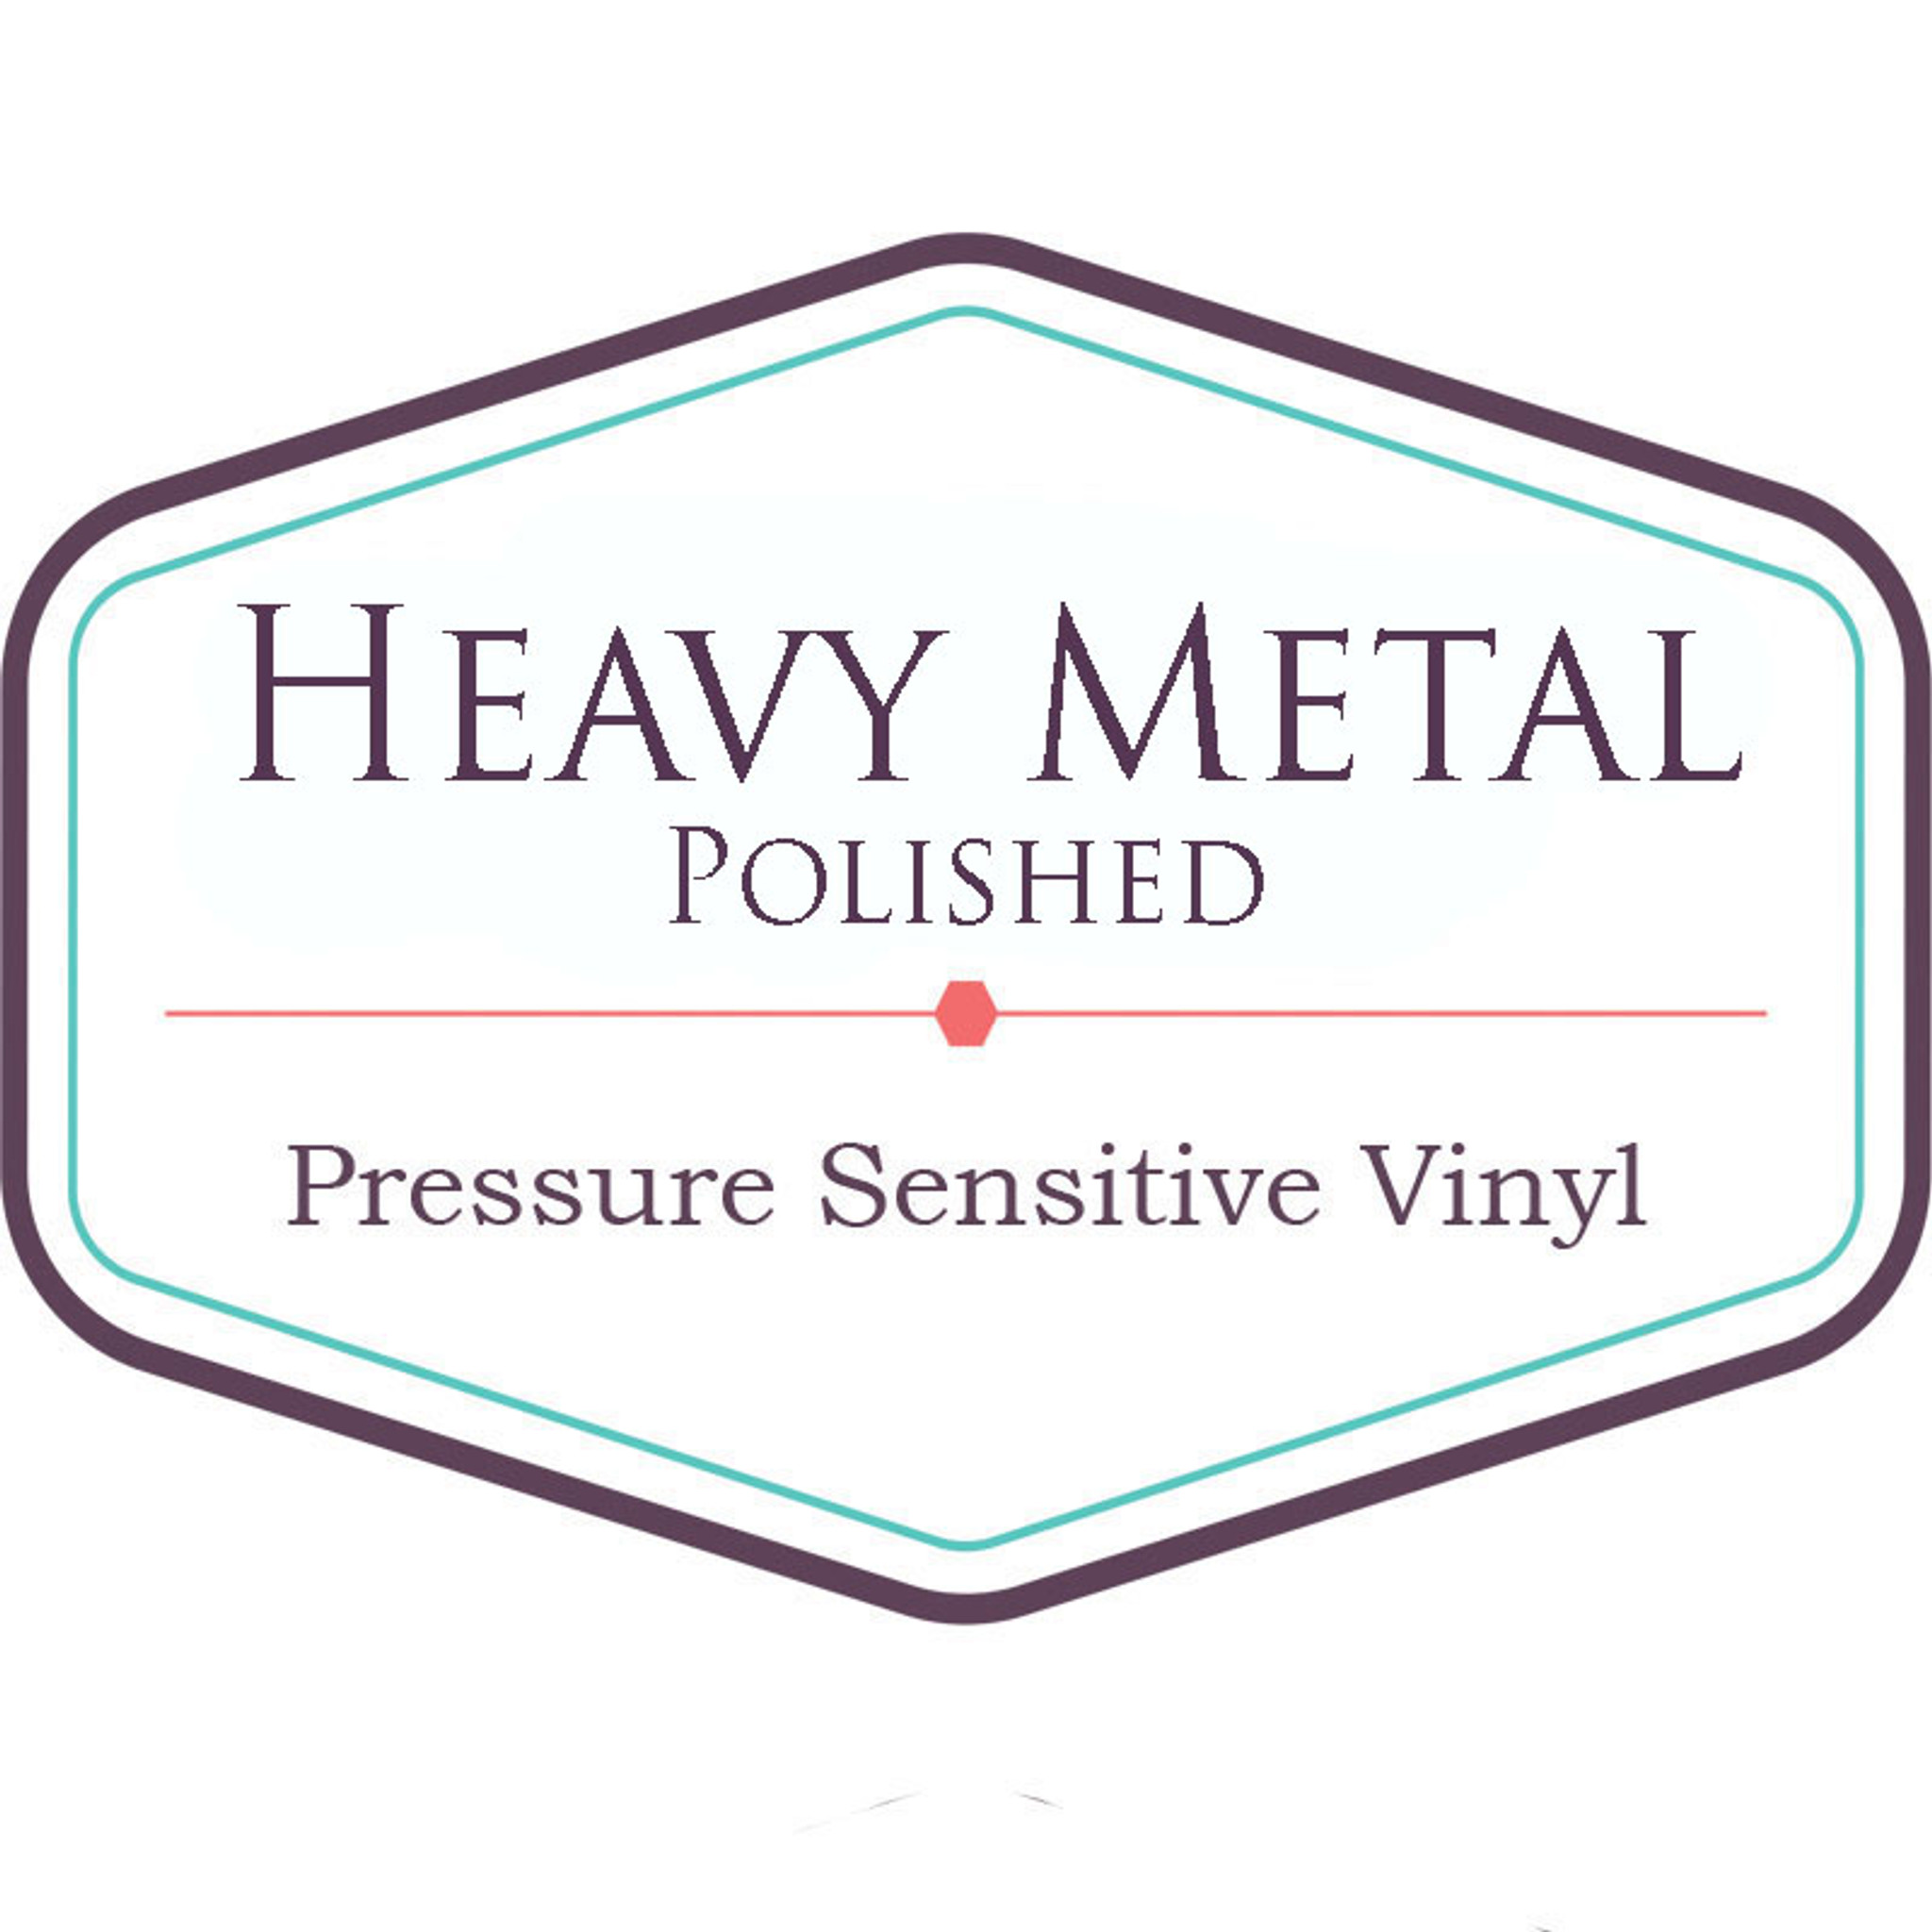 Heavy Metal (Polished)